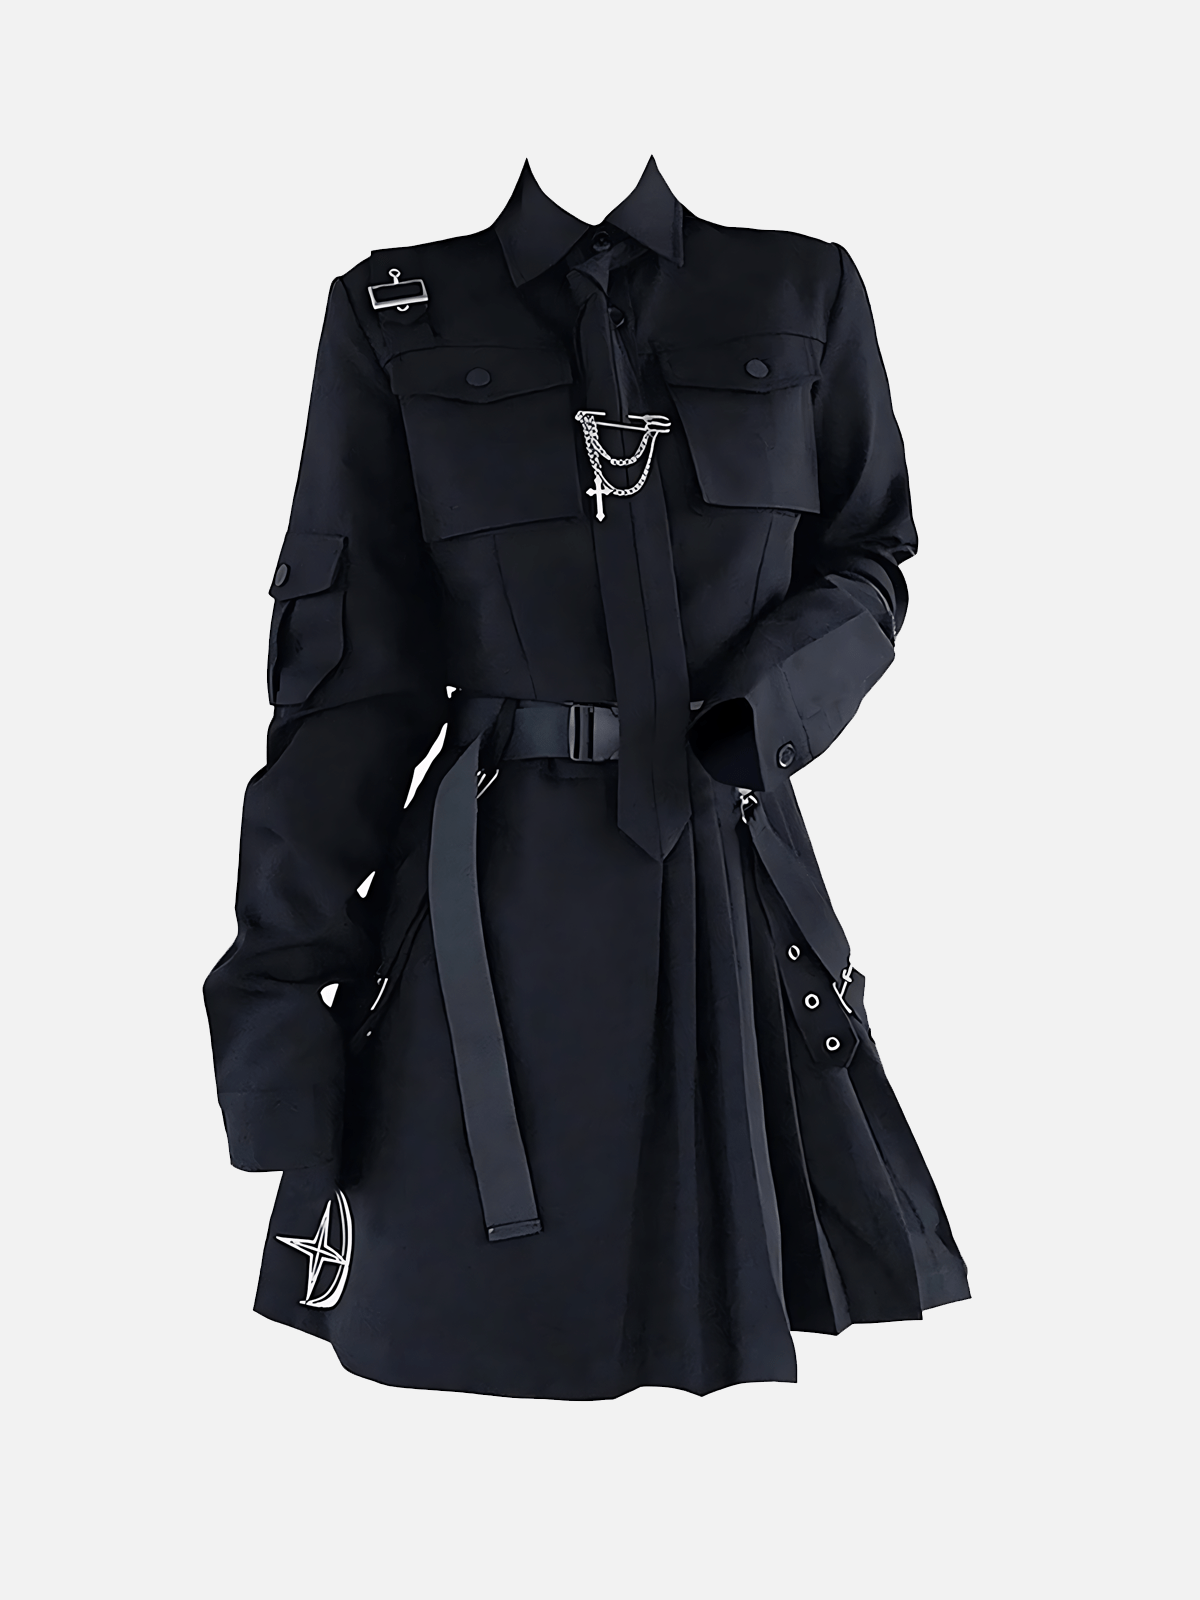 NEV Dark Gothic Exposed Waist Skirt Suit